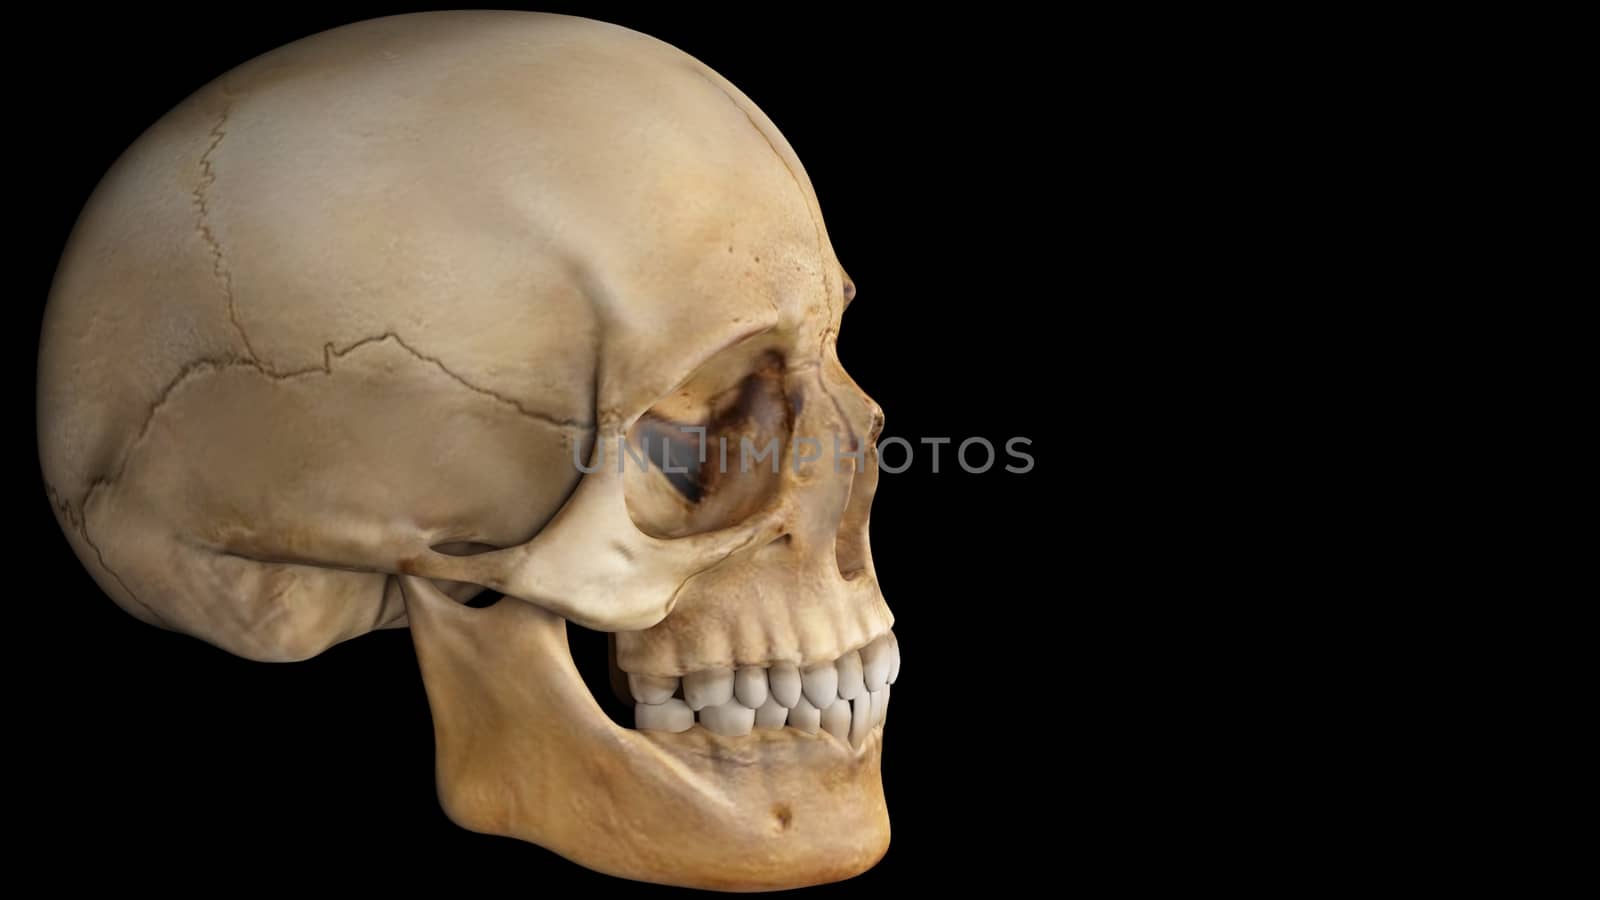 artifical human skull on black background, skull by Maharana777